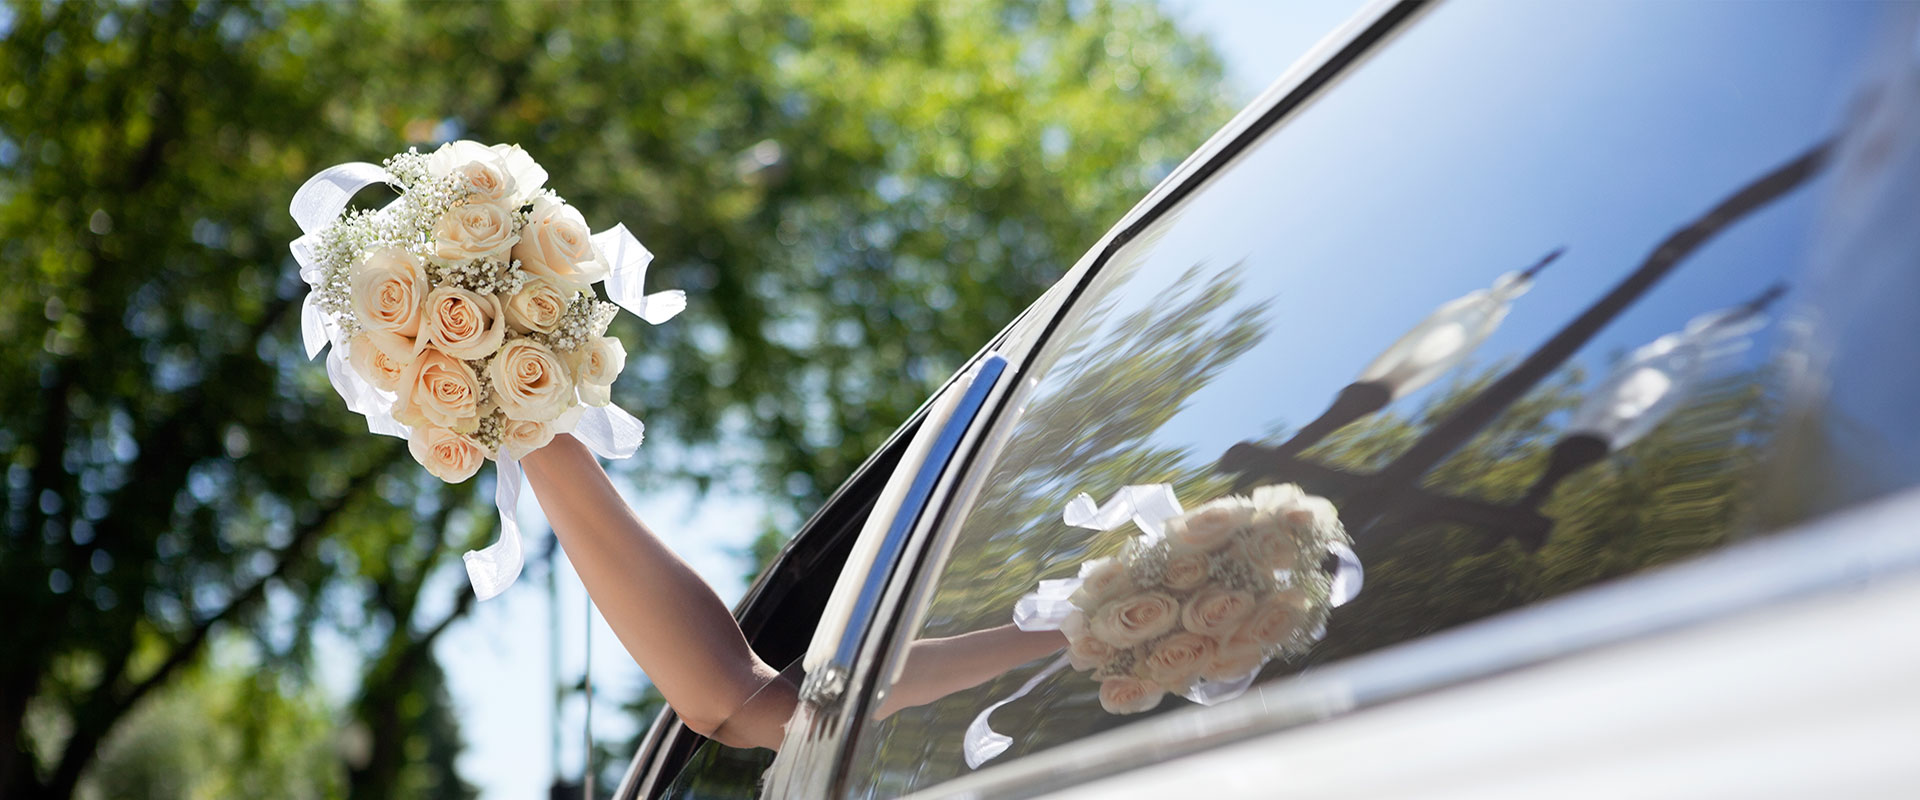 Okanagan Limousine offers limo services for weddings